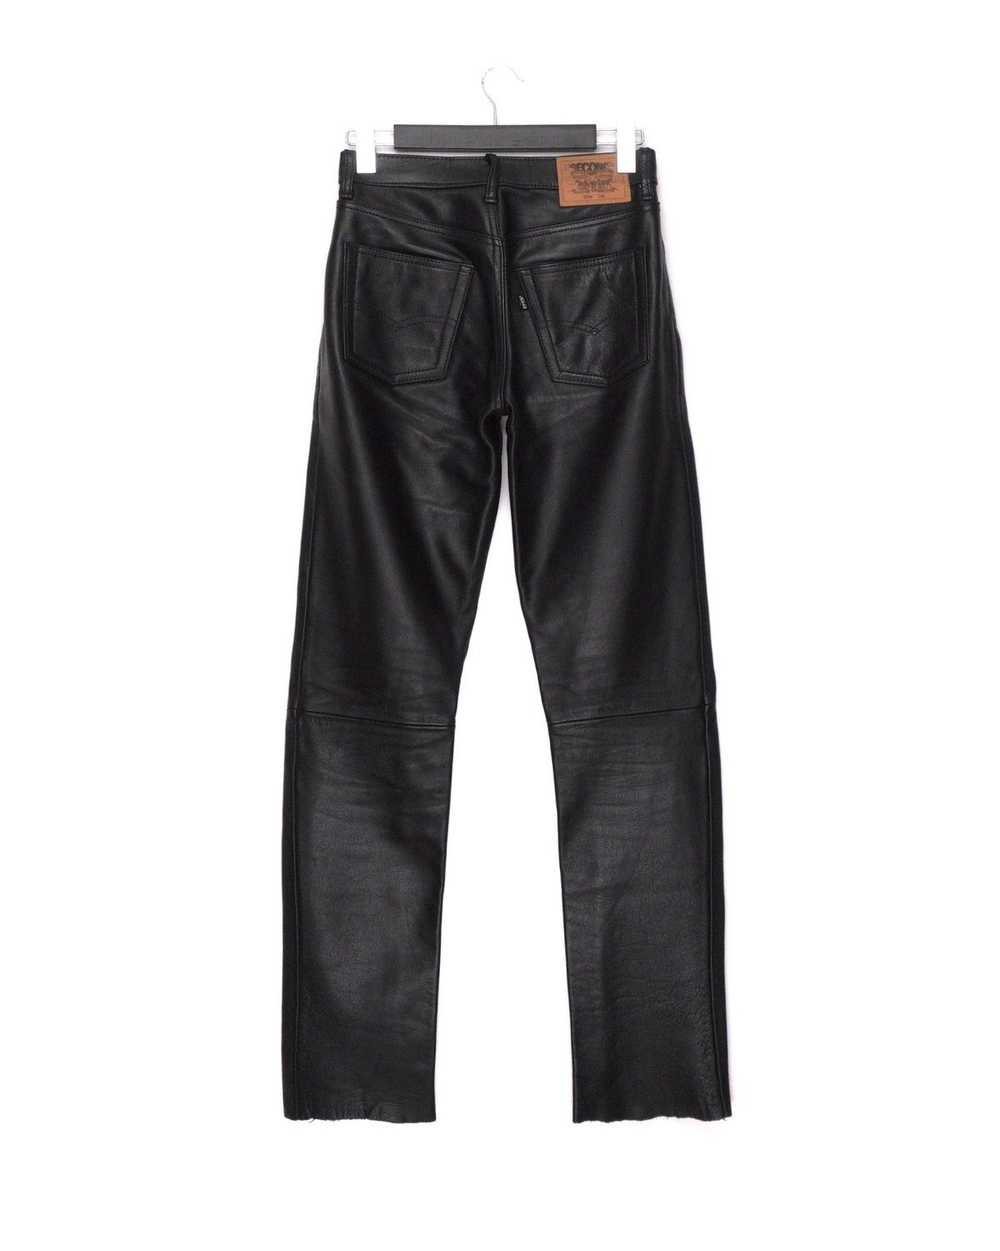 Levi's Vintage Levi’s Genuine Leather Black Pants - image 2